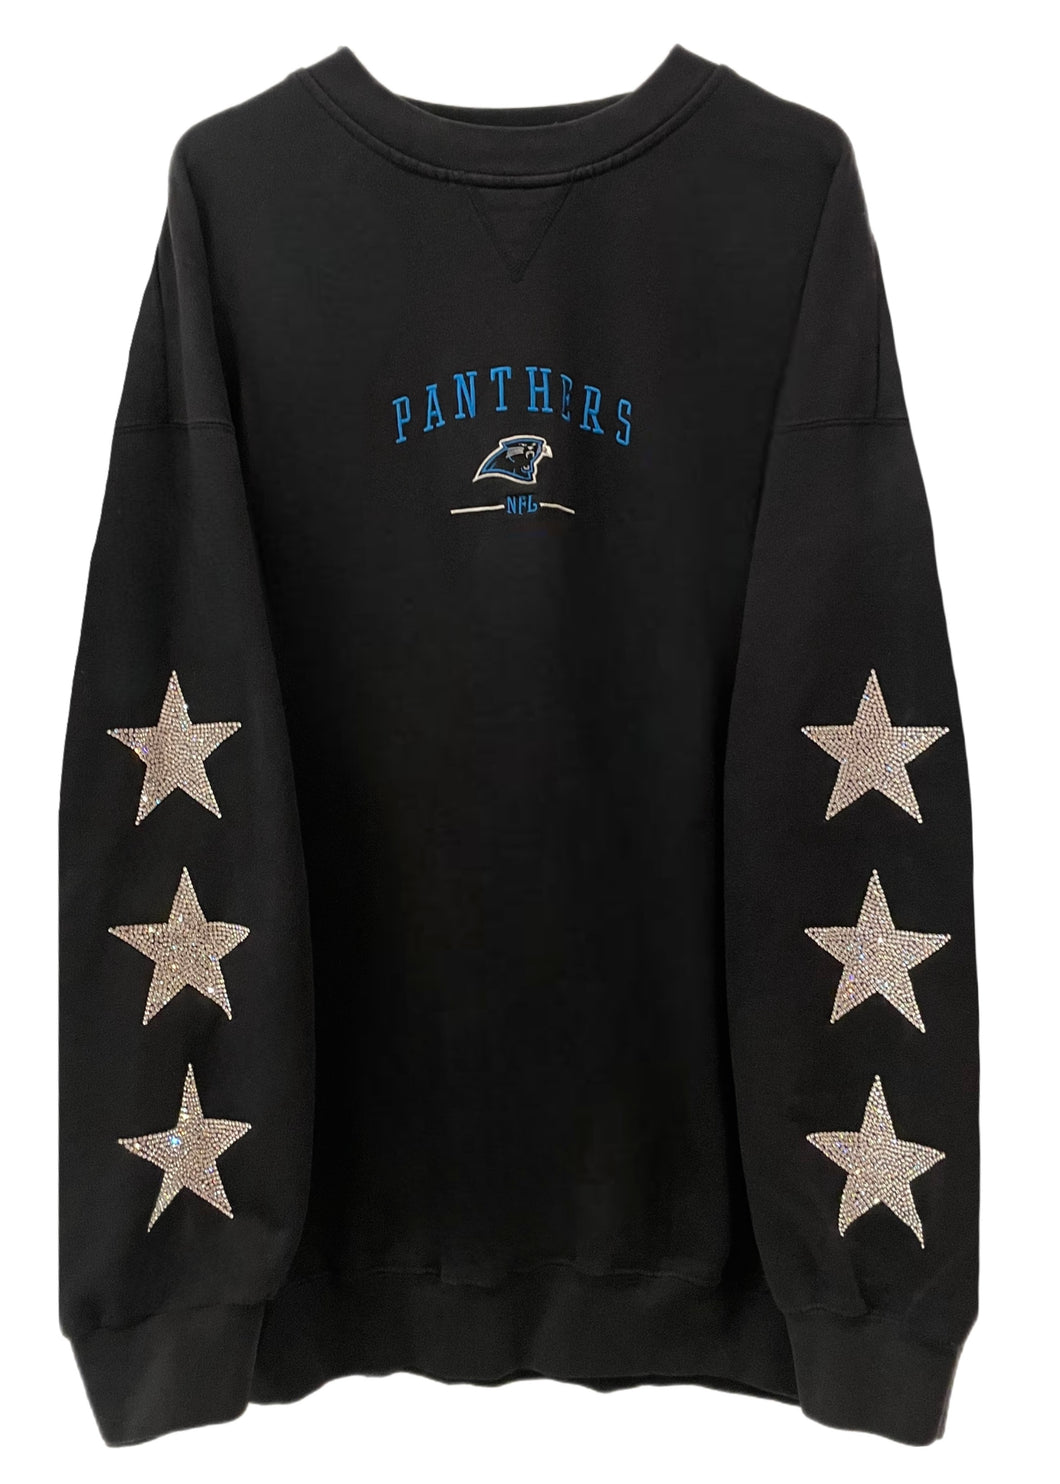 Carolina Panthers, NFL One of a KIND Vintage NFL Sweatshirt with Three Crystal Star Design